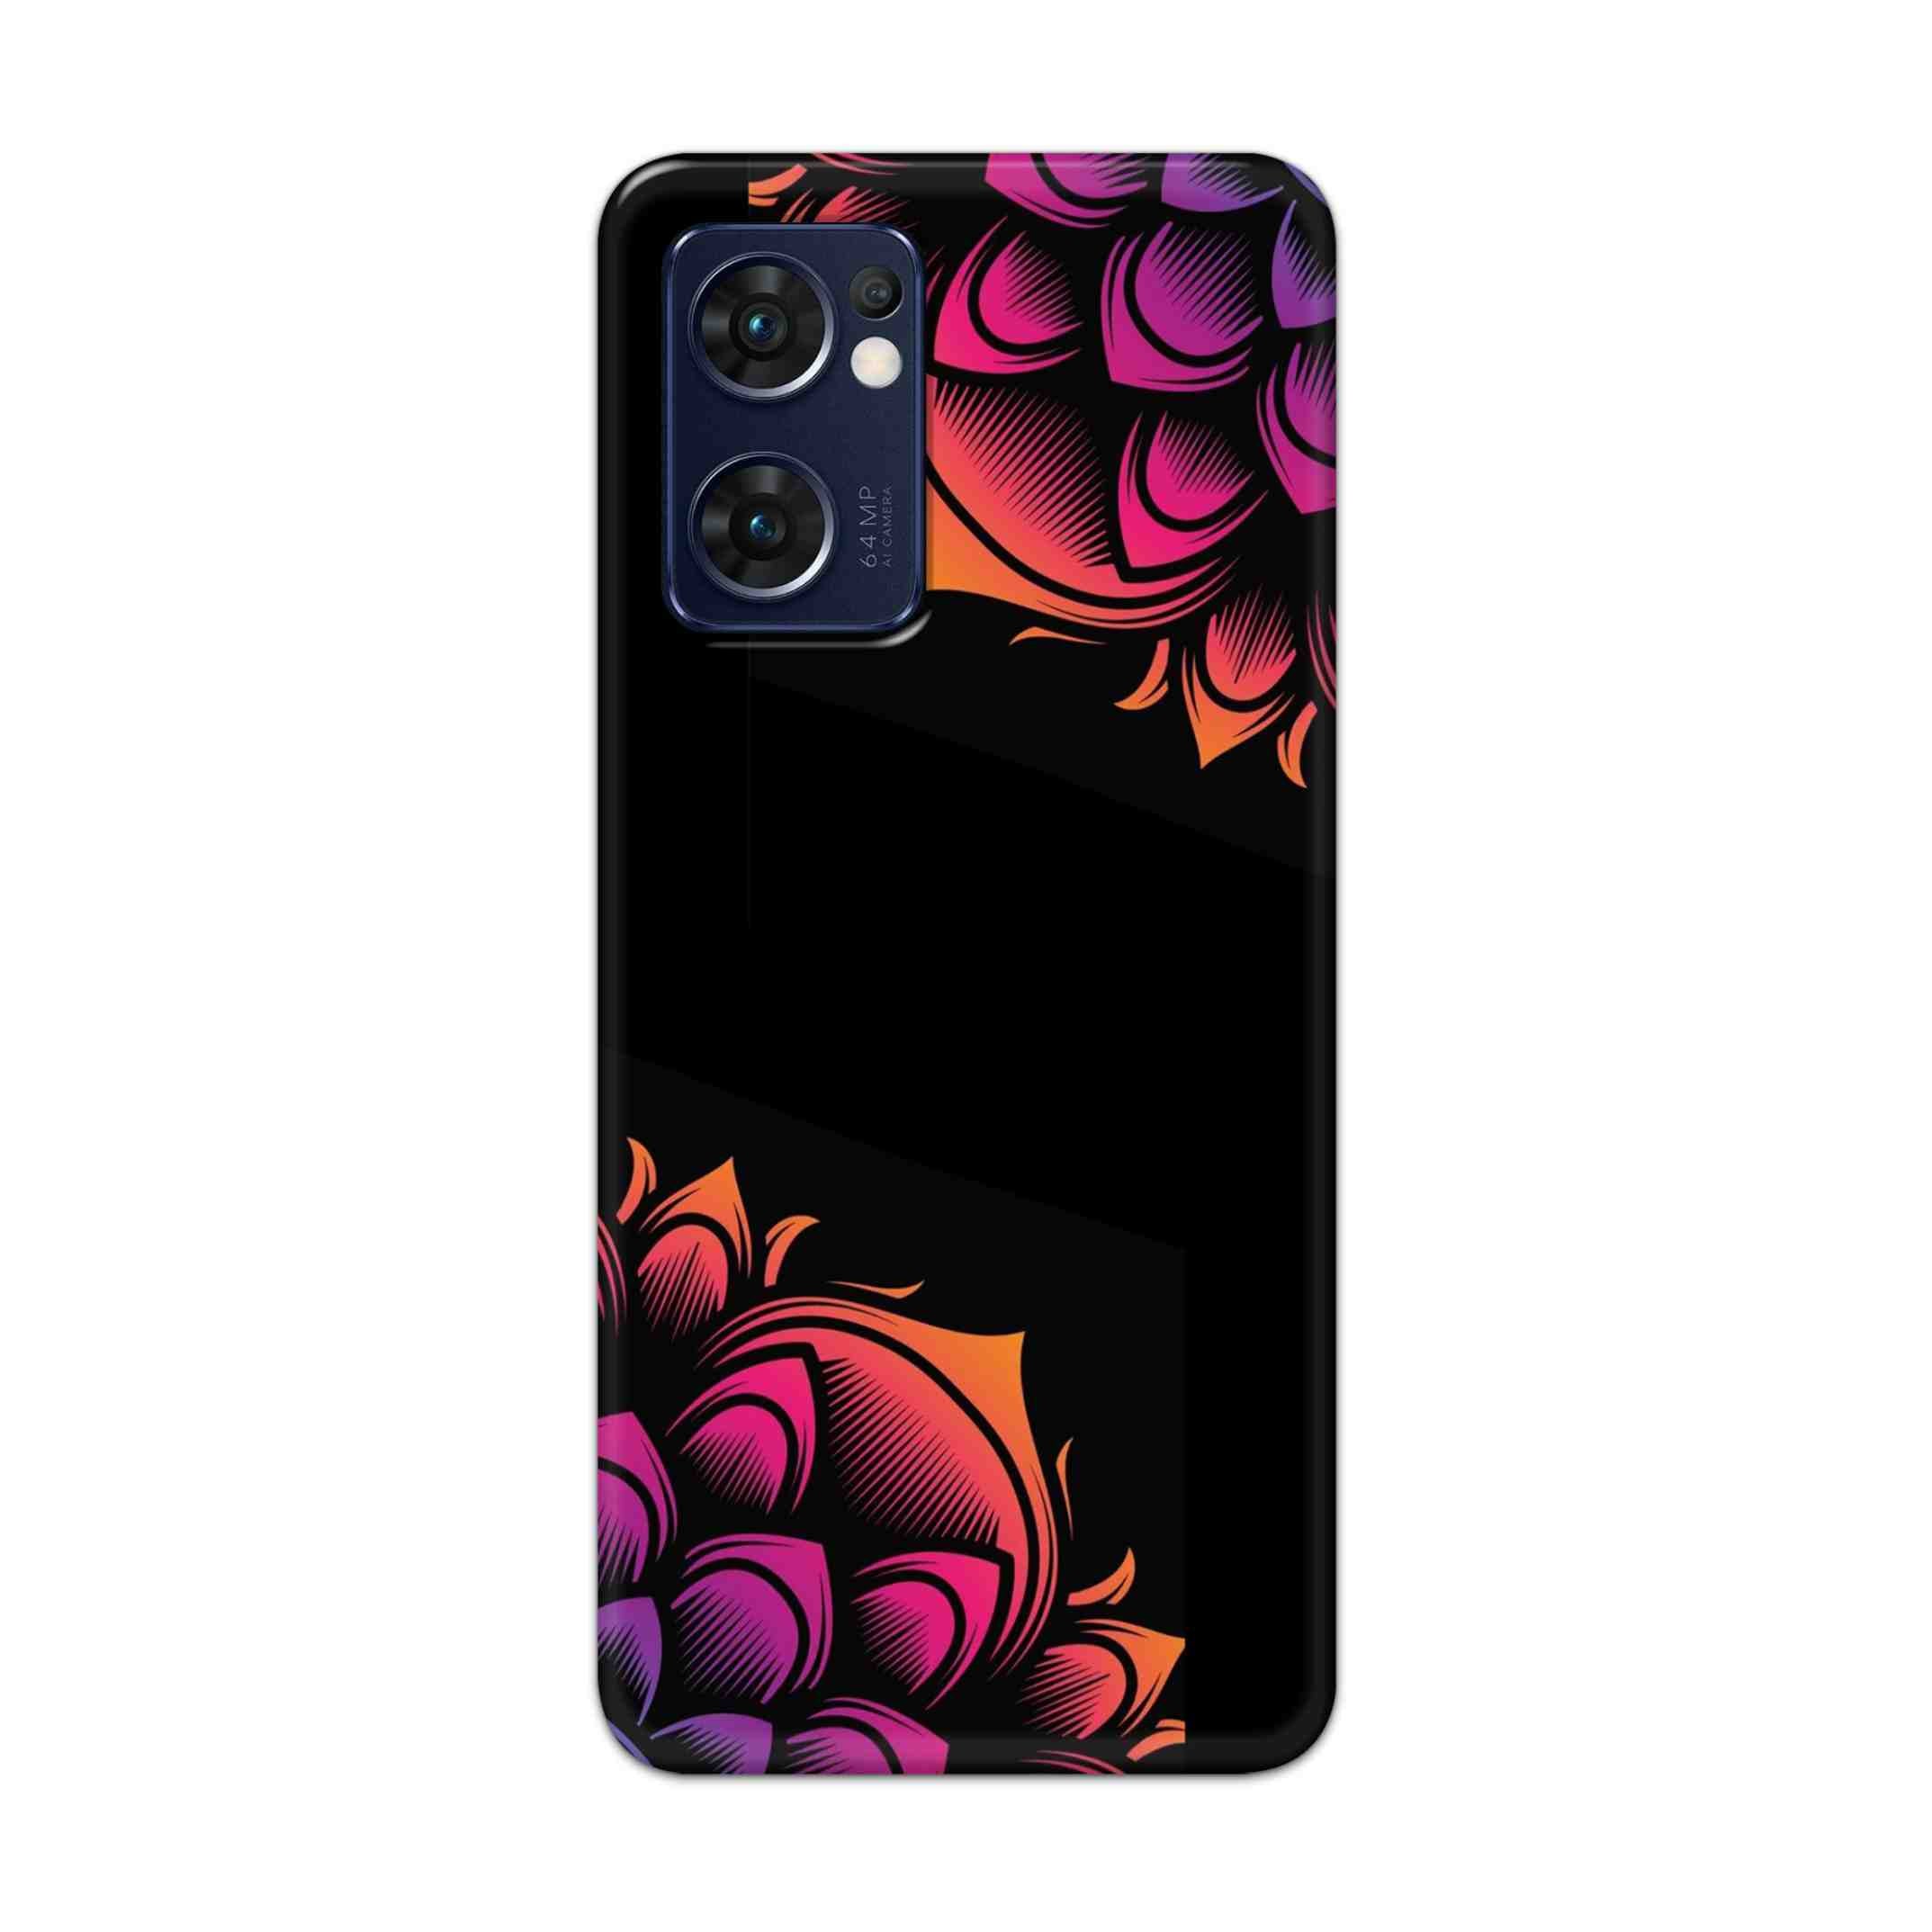 Buy Mandala Hard Back Mobile Phone Case Cover For Reno 7 5G Online